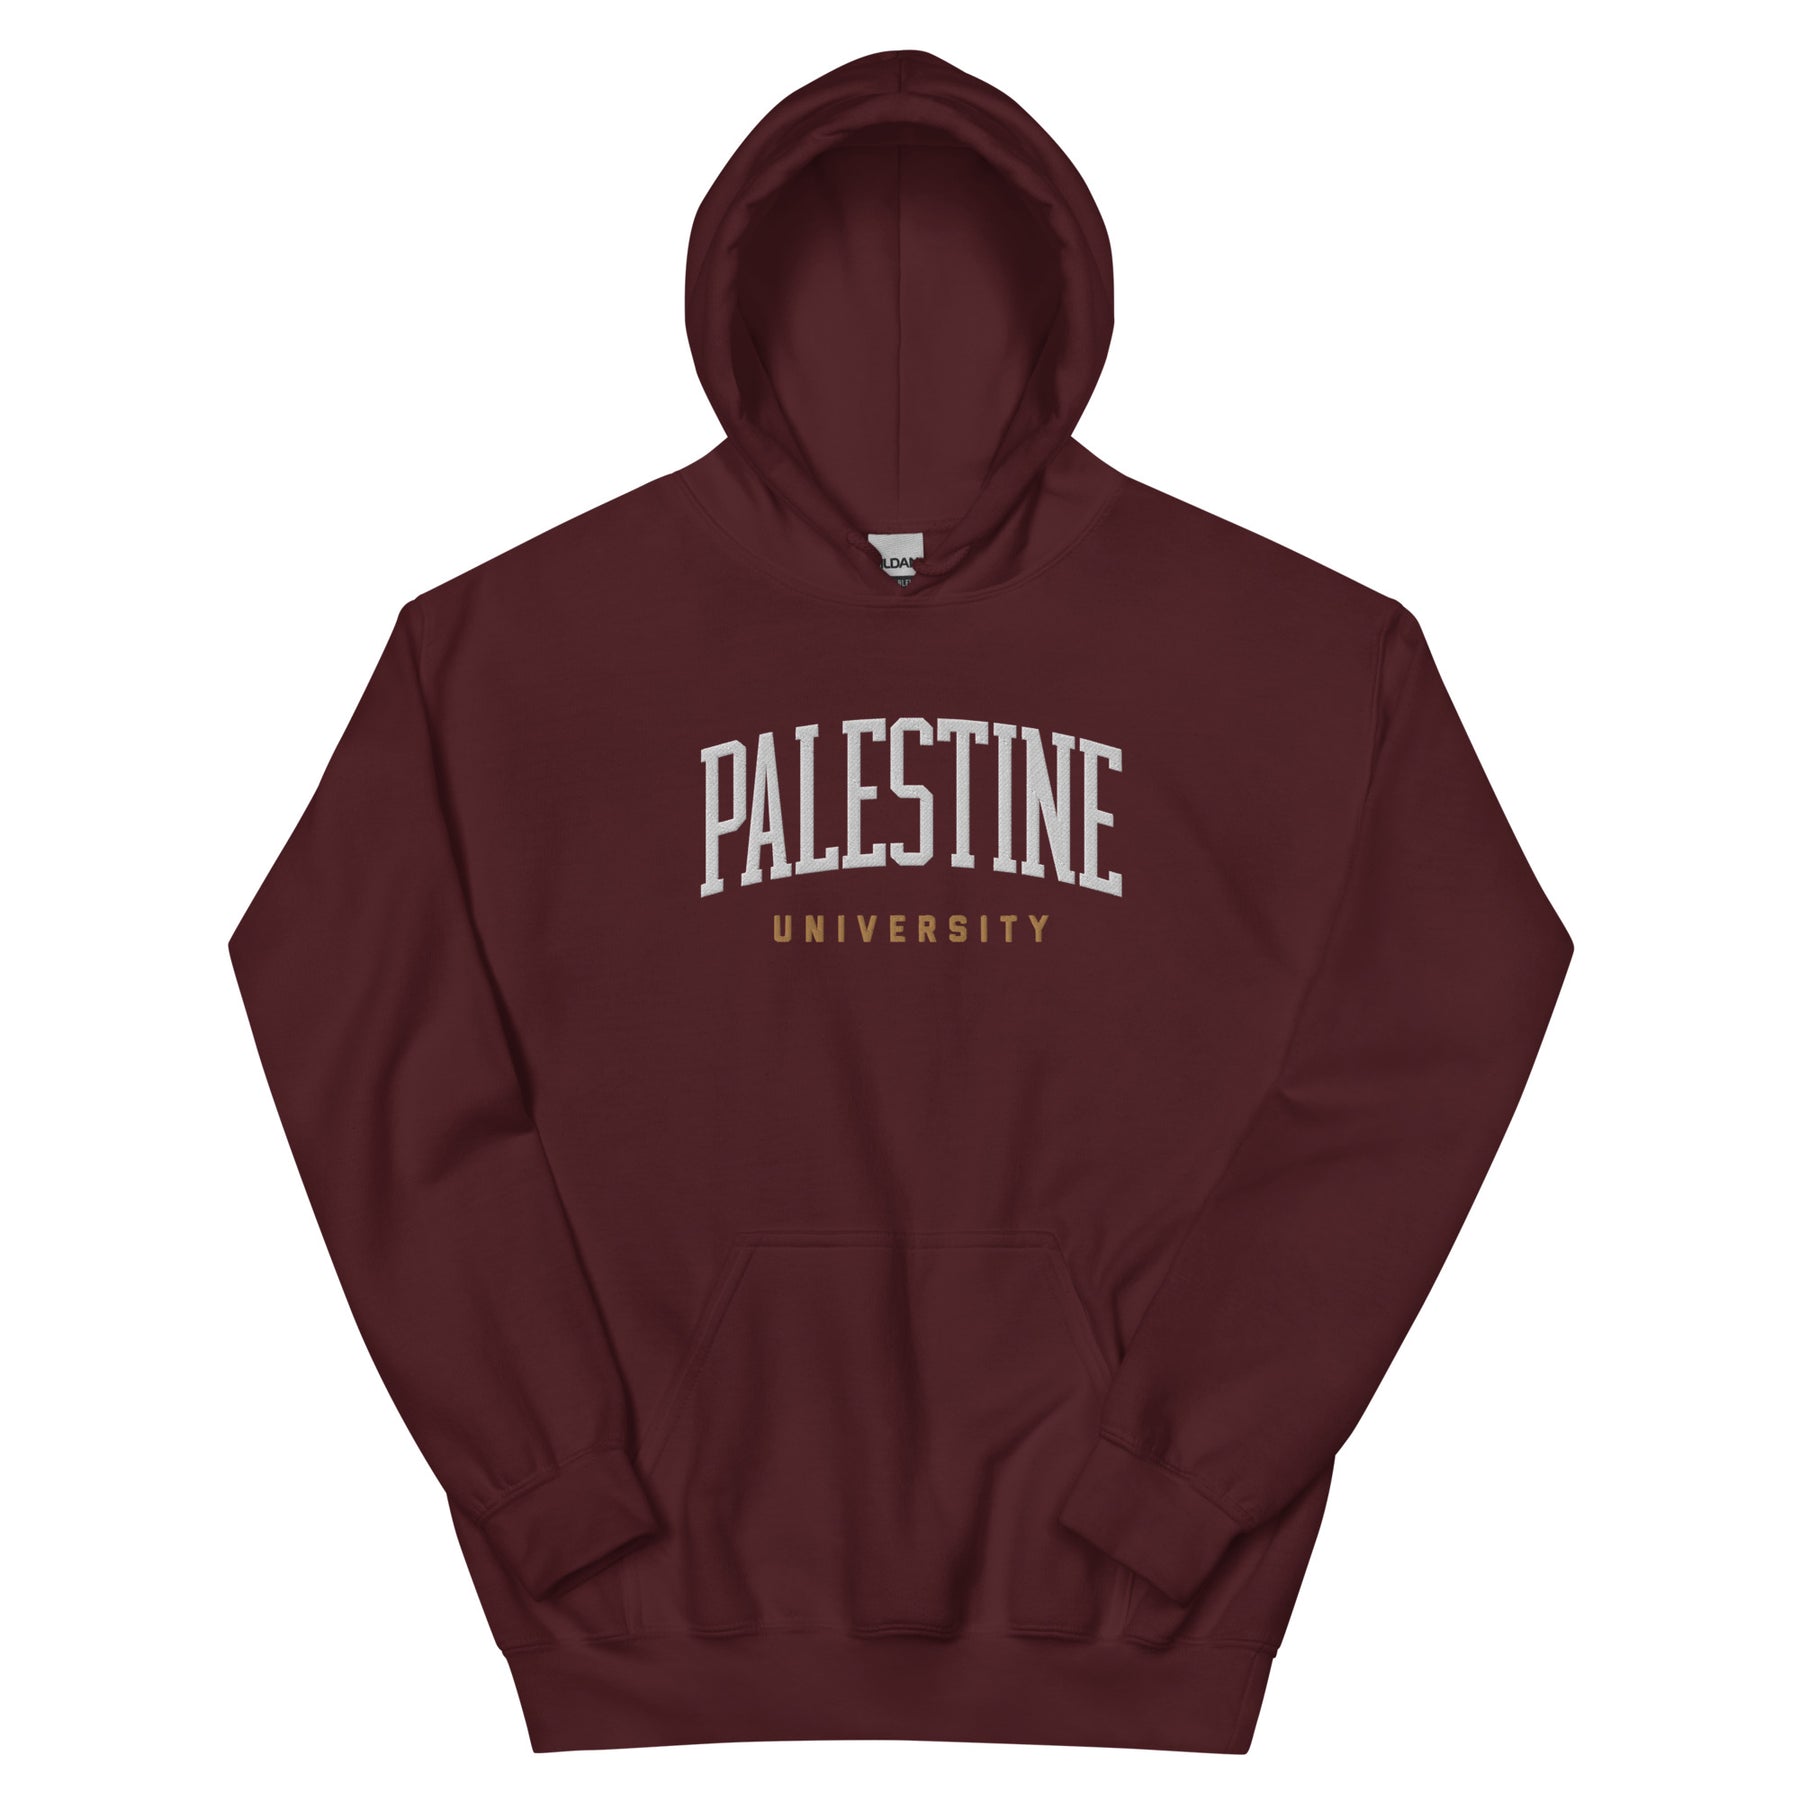 Palestine university hoodie in maroon by Dar Collective